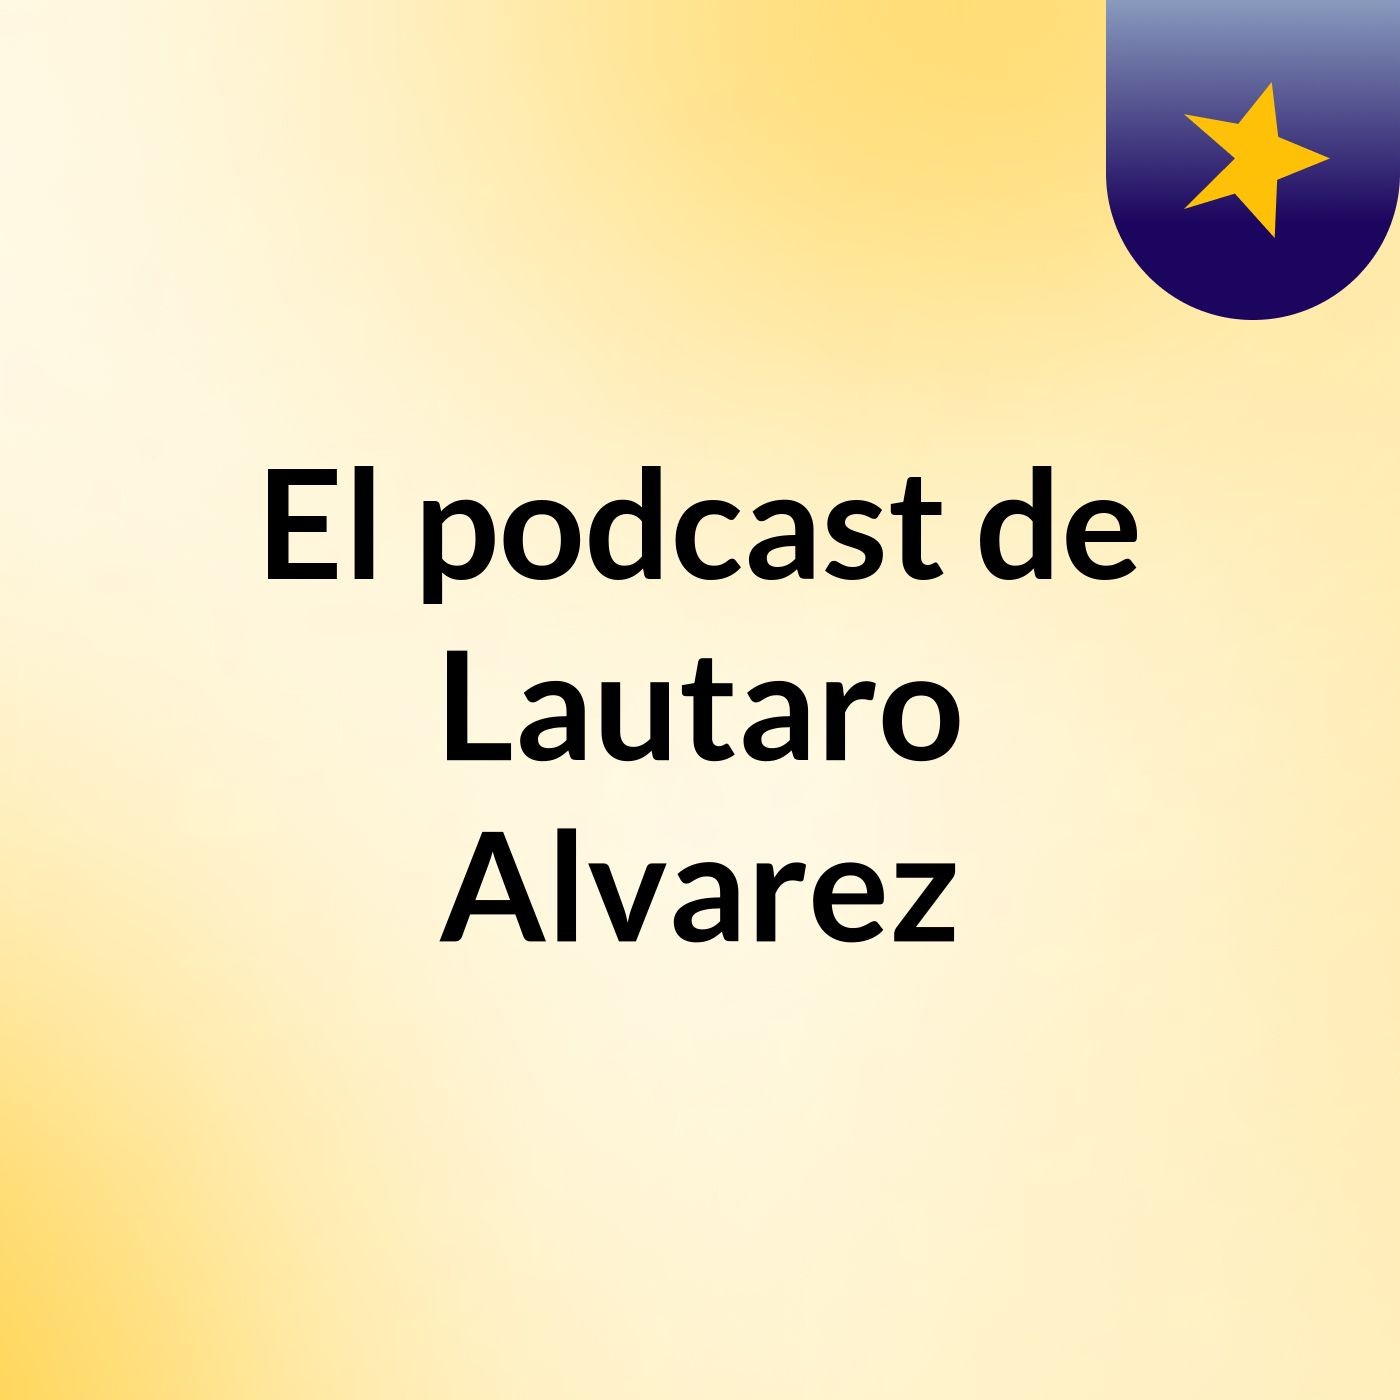 El podcast de Lautaro Alvarez